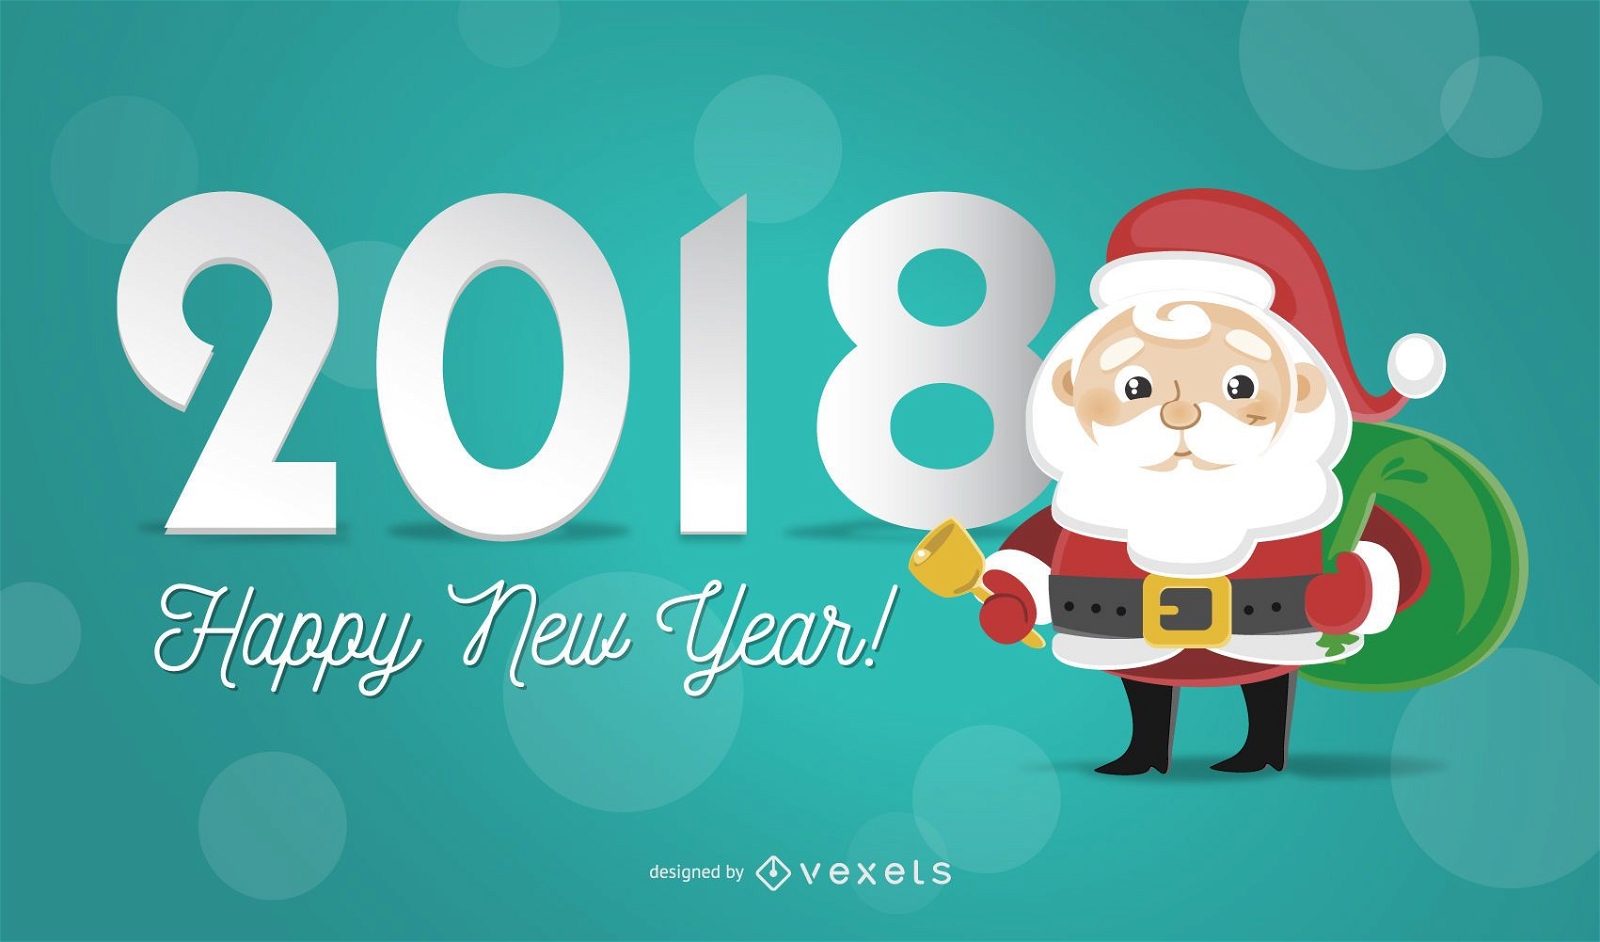 2018 greeting card with Santa illustration